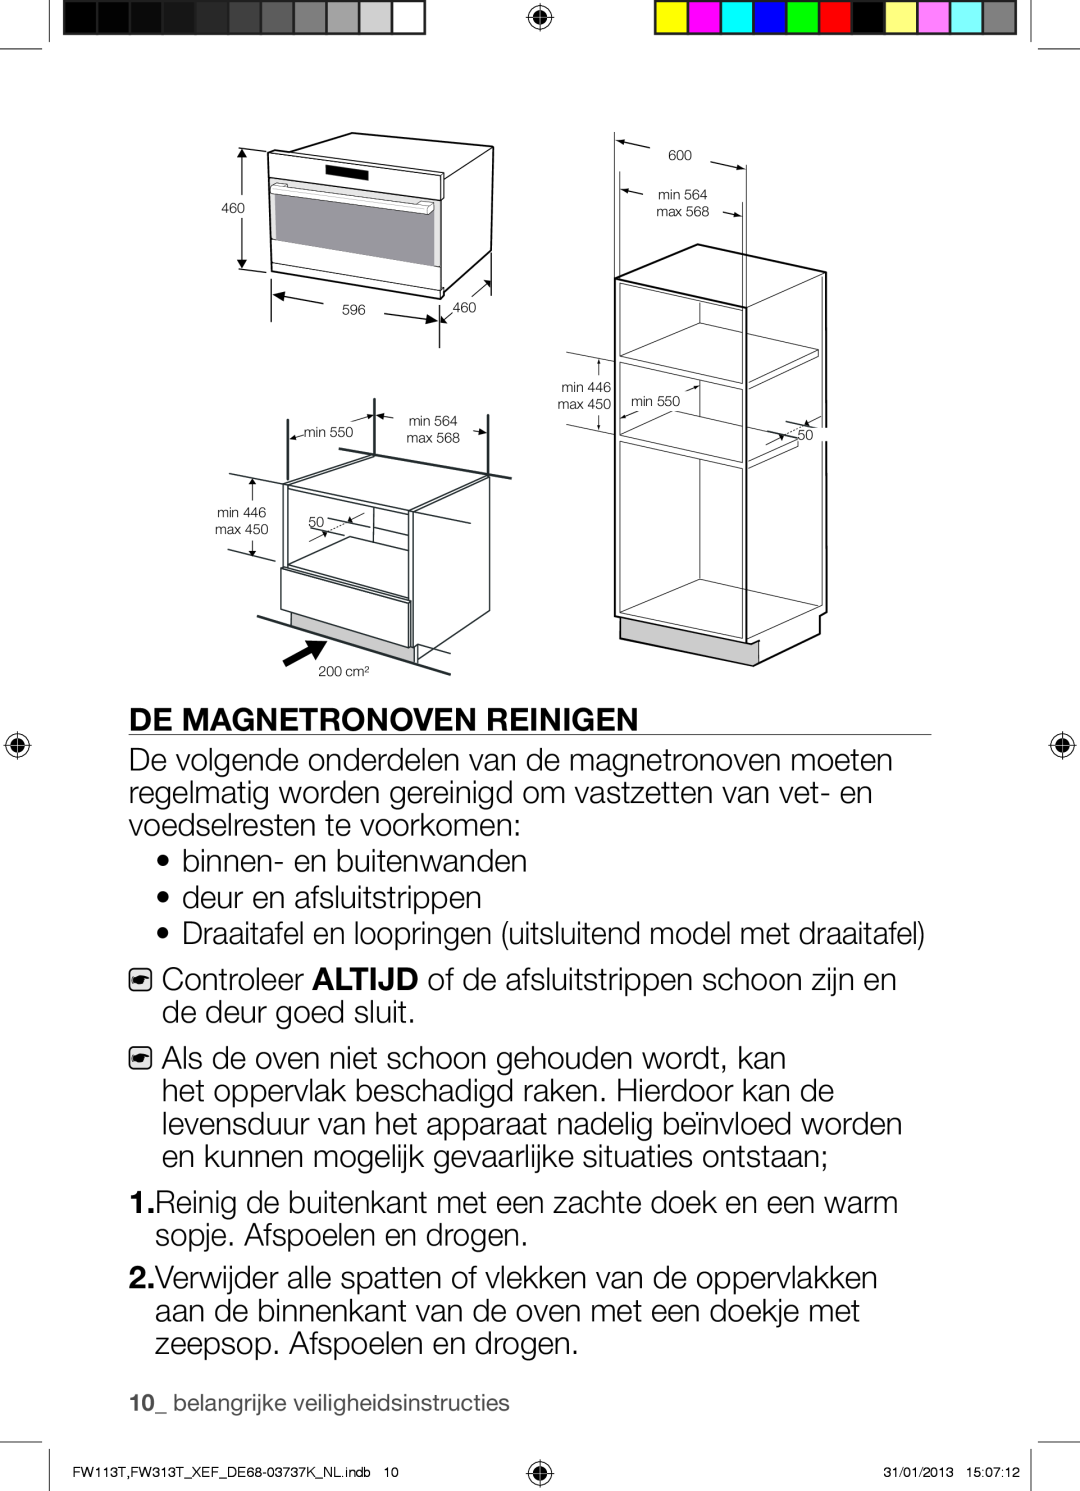 Samsung FW113T002/XEF manual De Magnetronoven Reinigen 